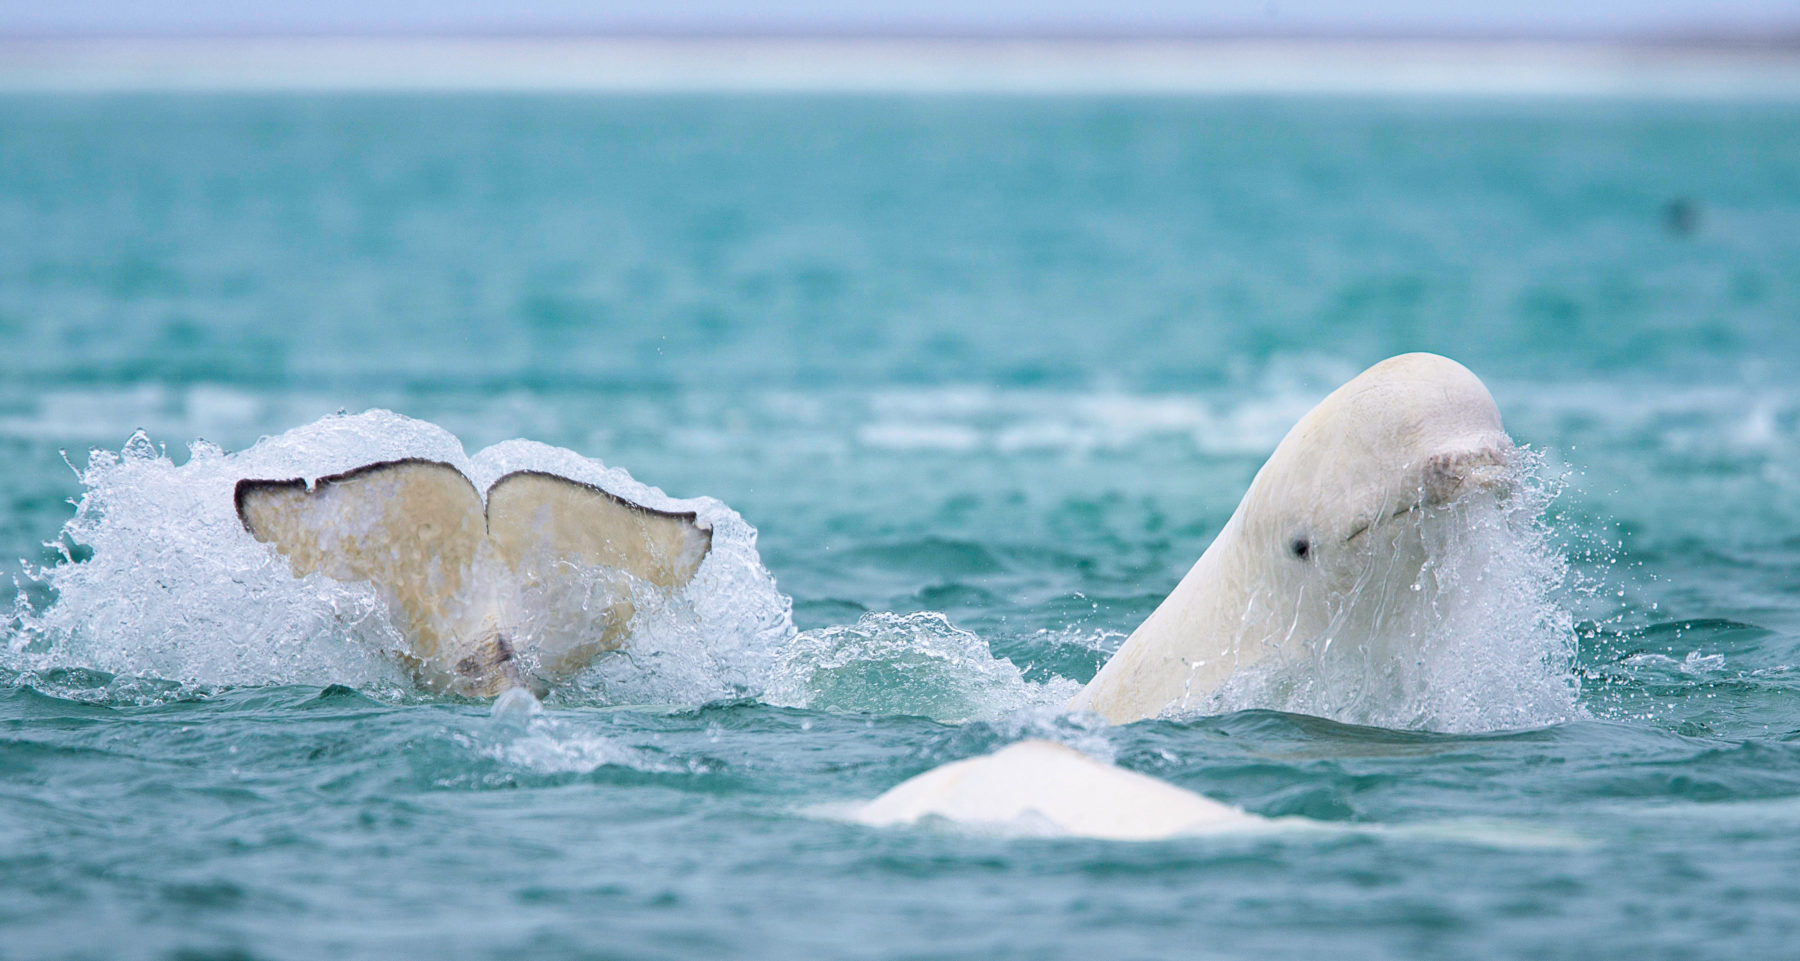 Luxury travel ideas: go beluga whale watching